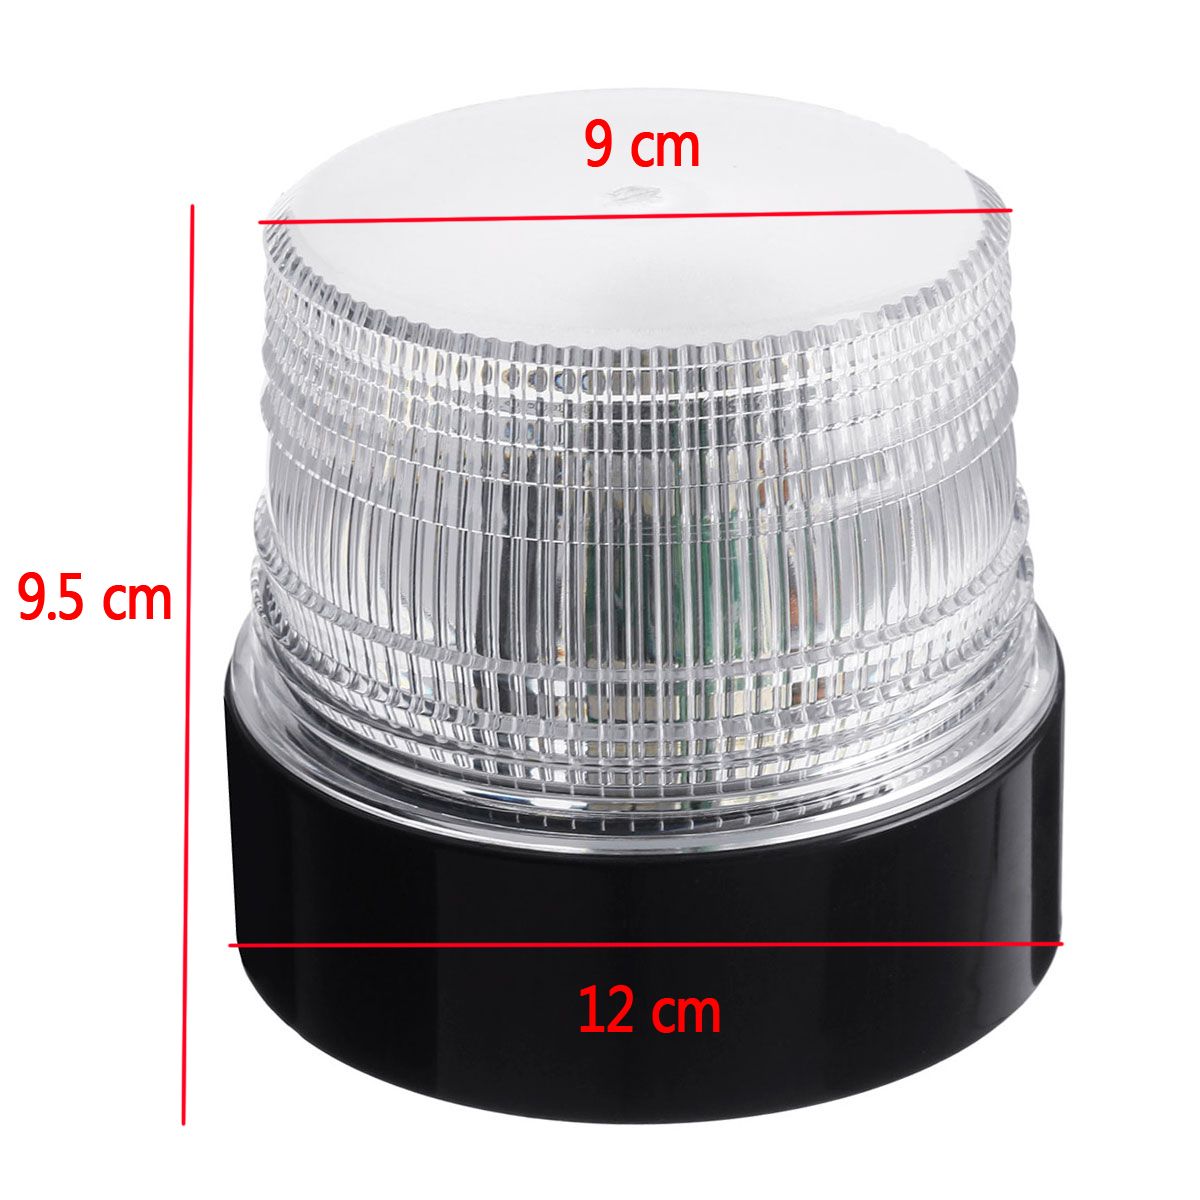 8-Colors-RGB-LED-Magnetic-Warning-Beacon-Light-Emergency-Hazard-Warning-Safety-Flashing-Strobe-Lamp--1727536